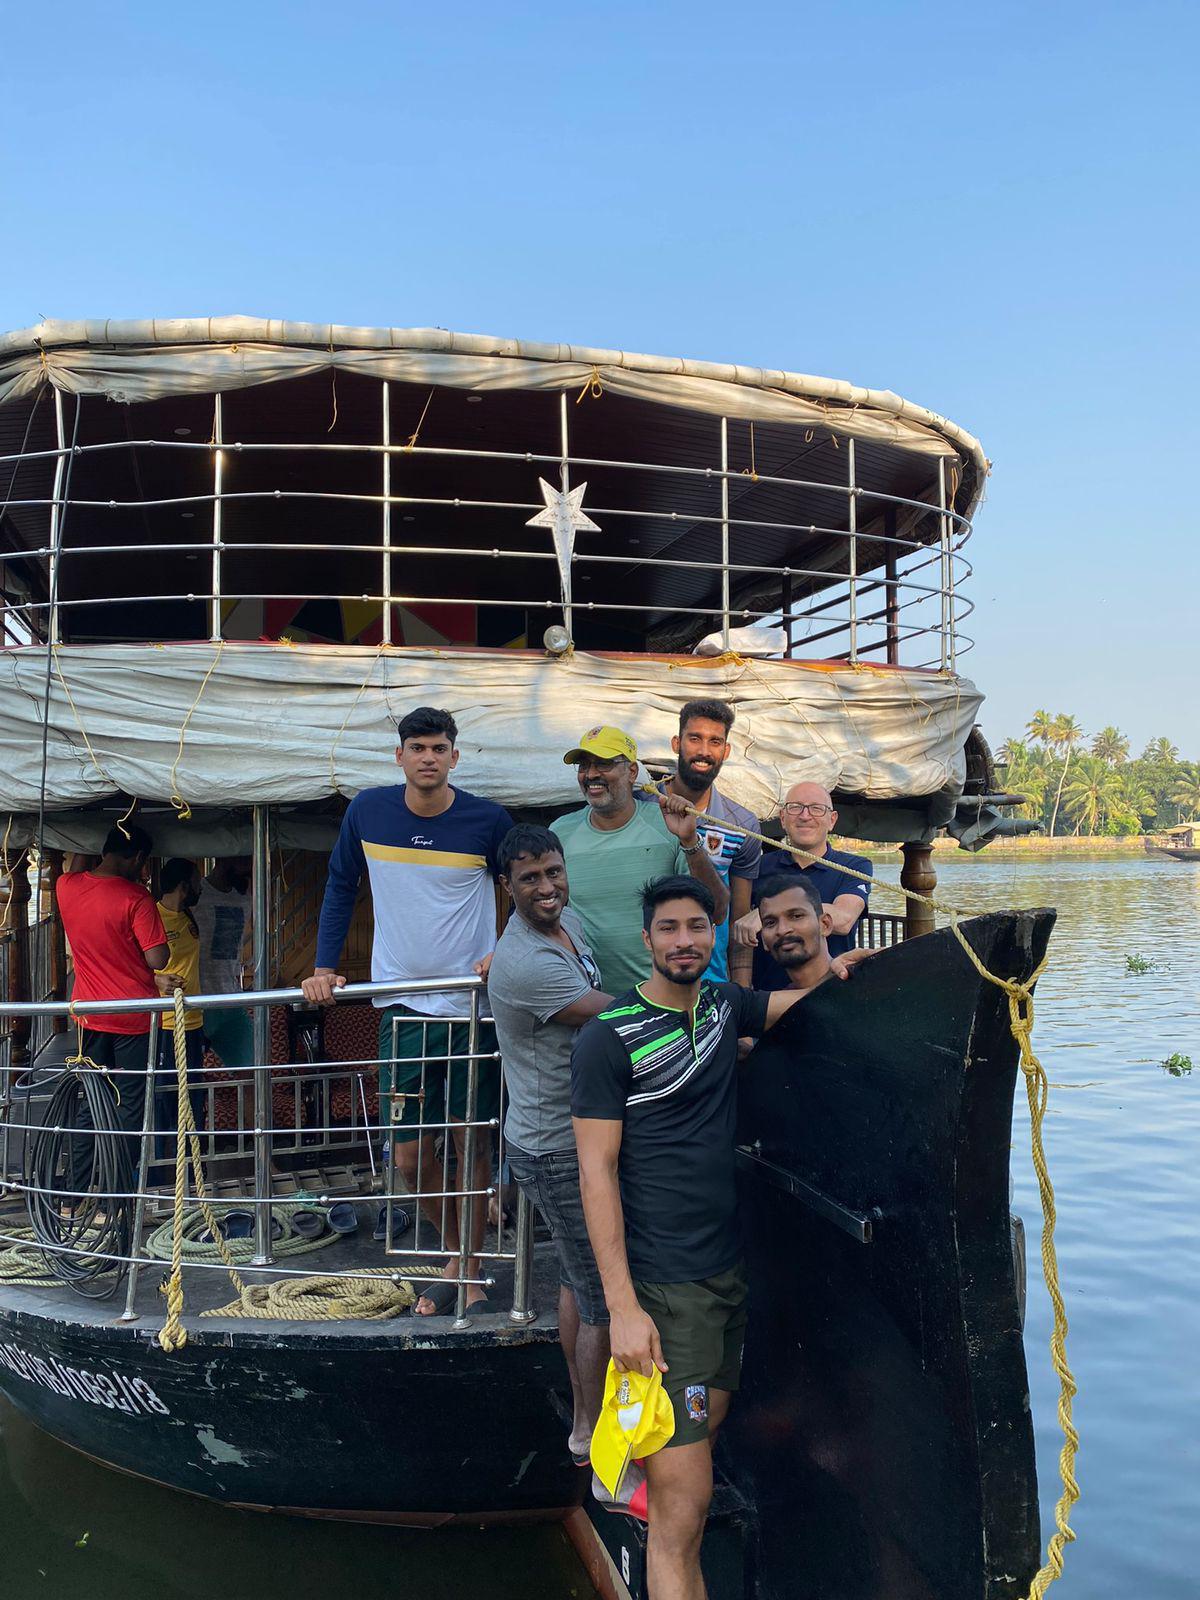 Members of Team Chennai Blitz on a houseboat trip